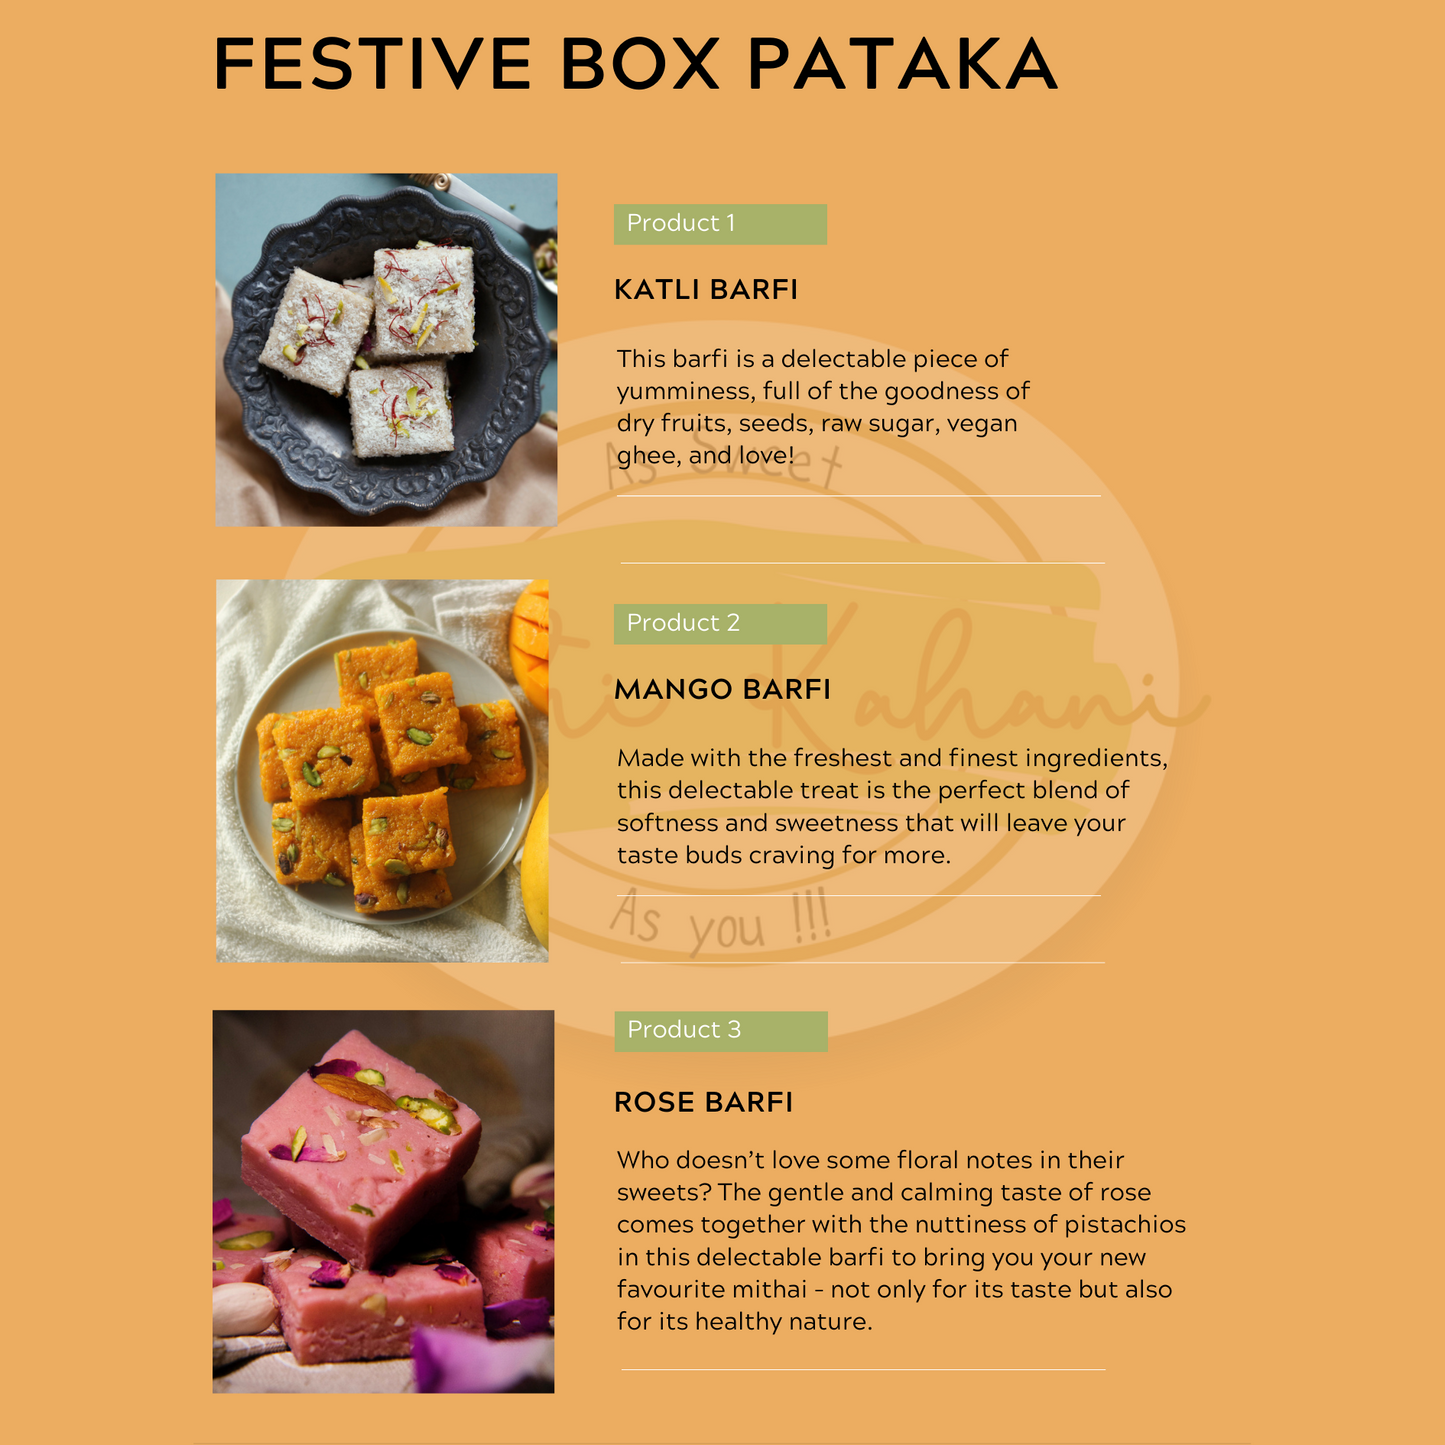 Festive Gift Box "Pataka"